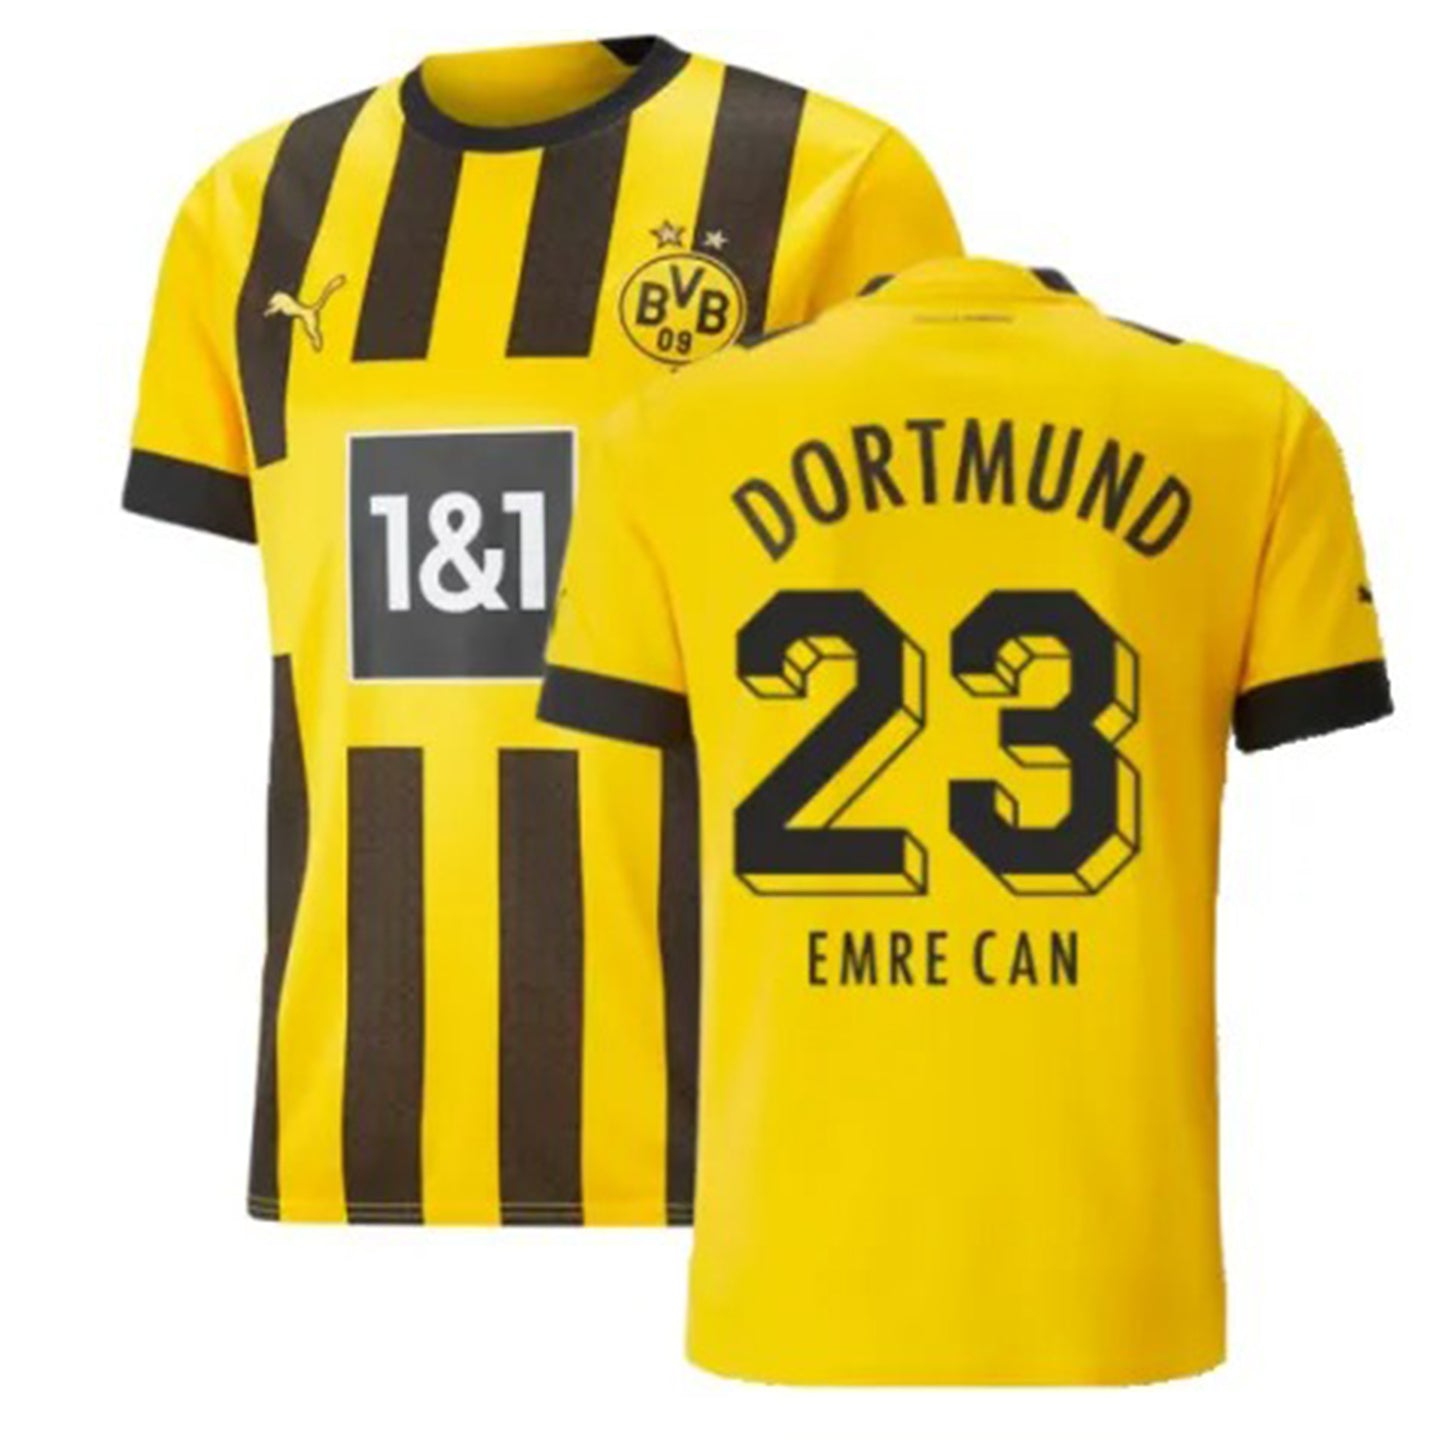 Emre Can Borussia Dortmund 23 Jersey